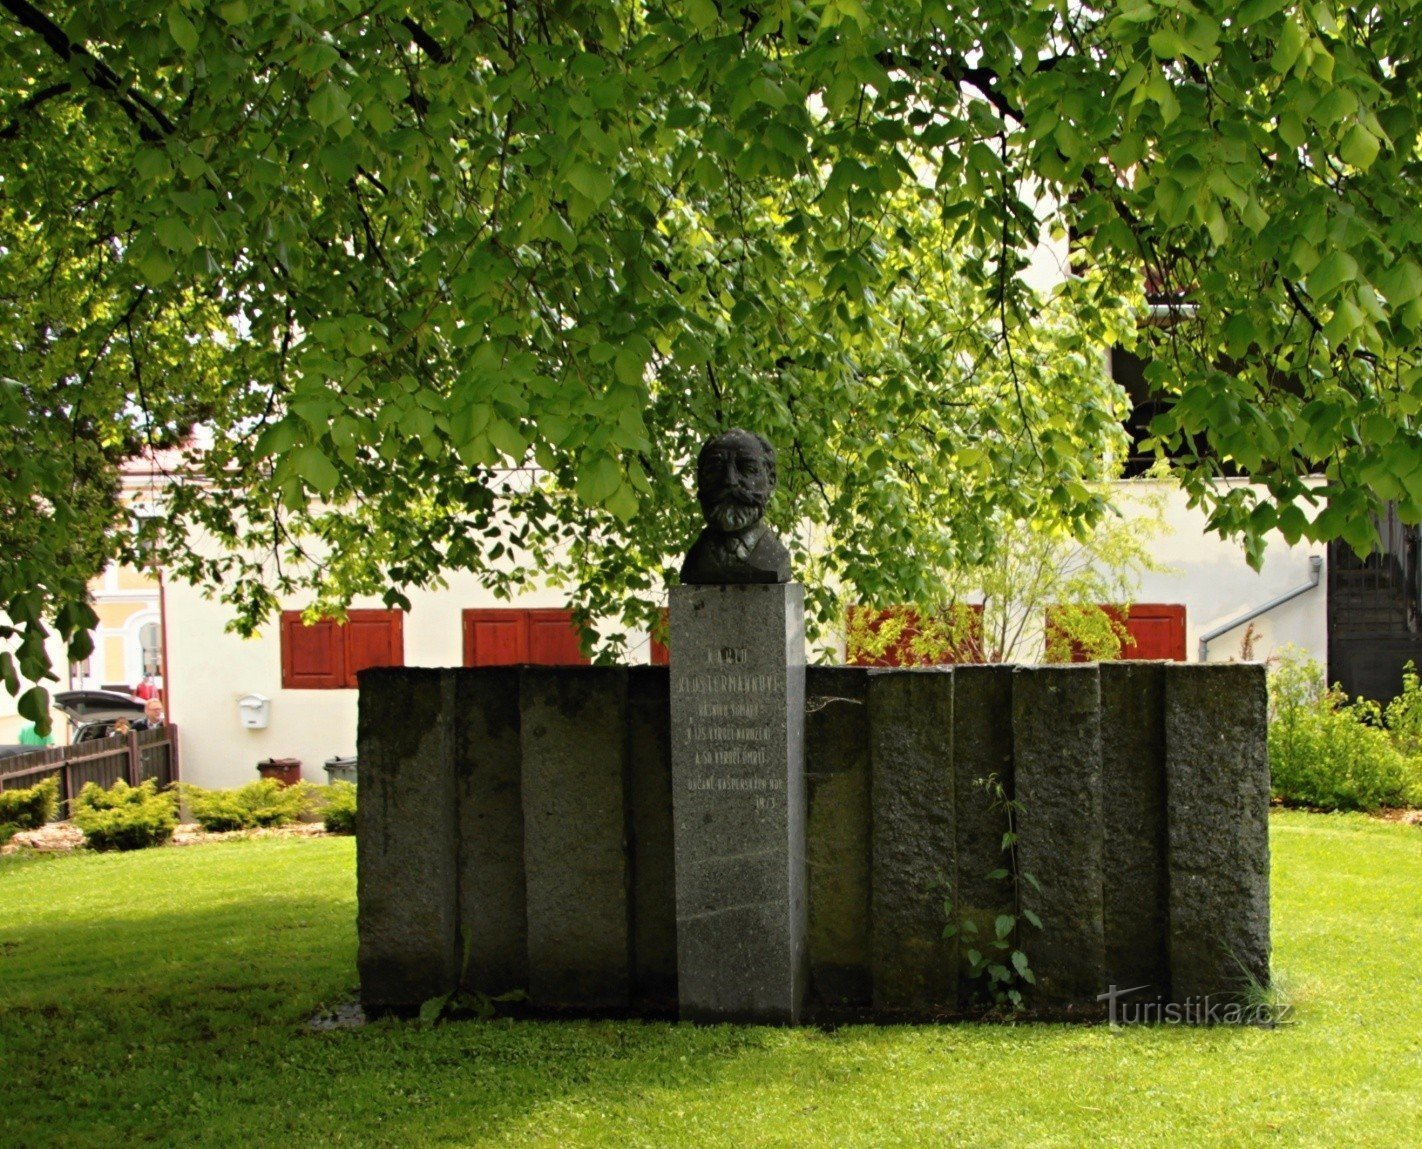 Karel Klostrmannin muistomerkki